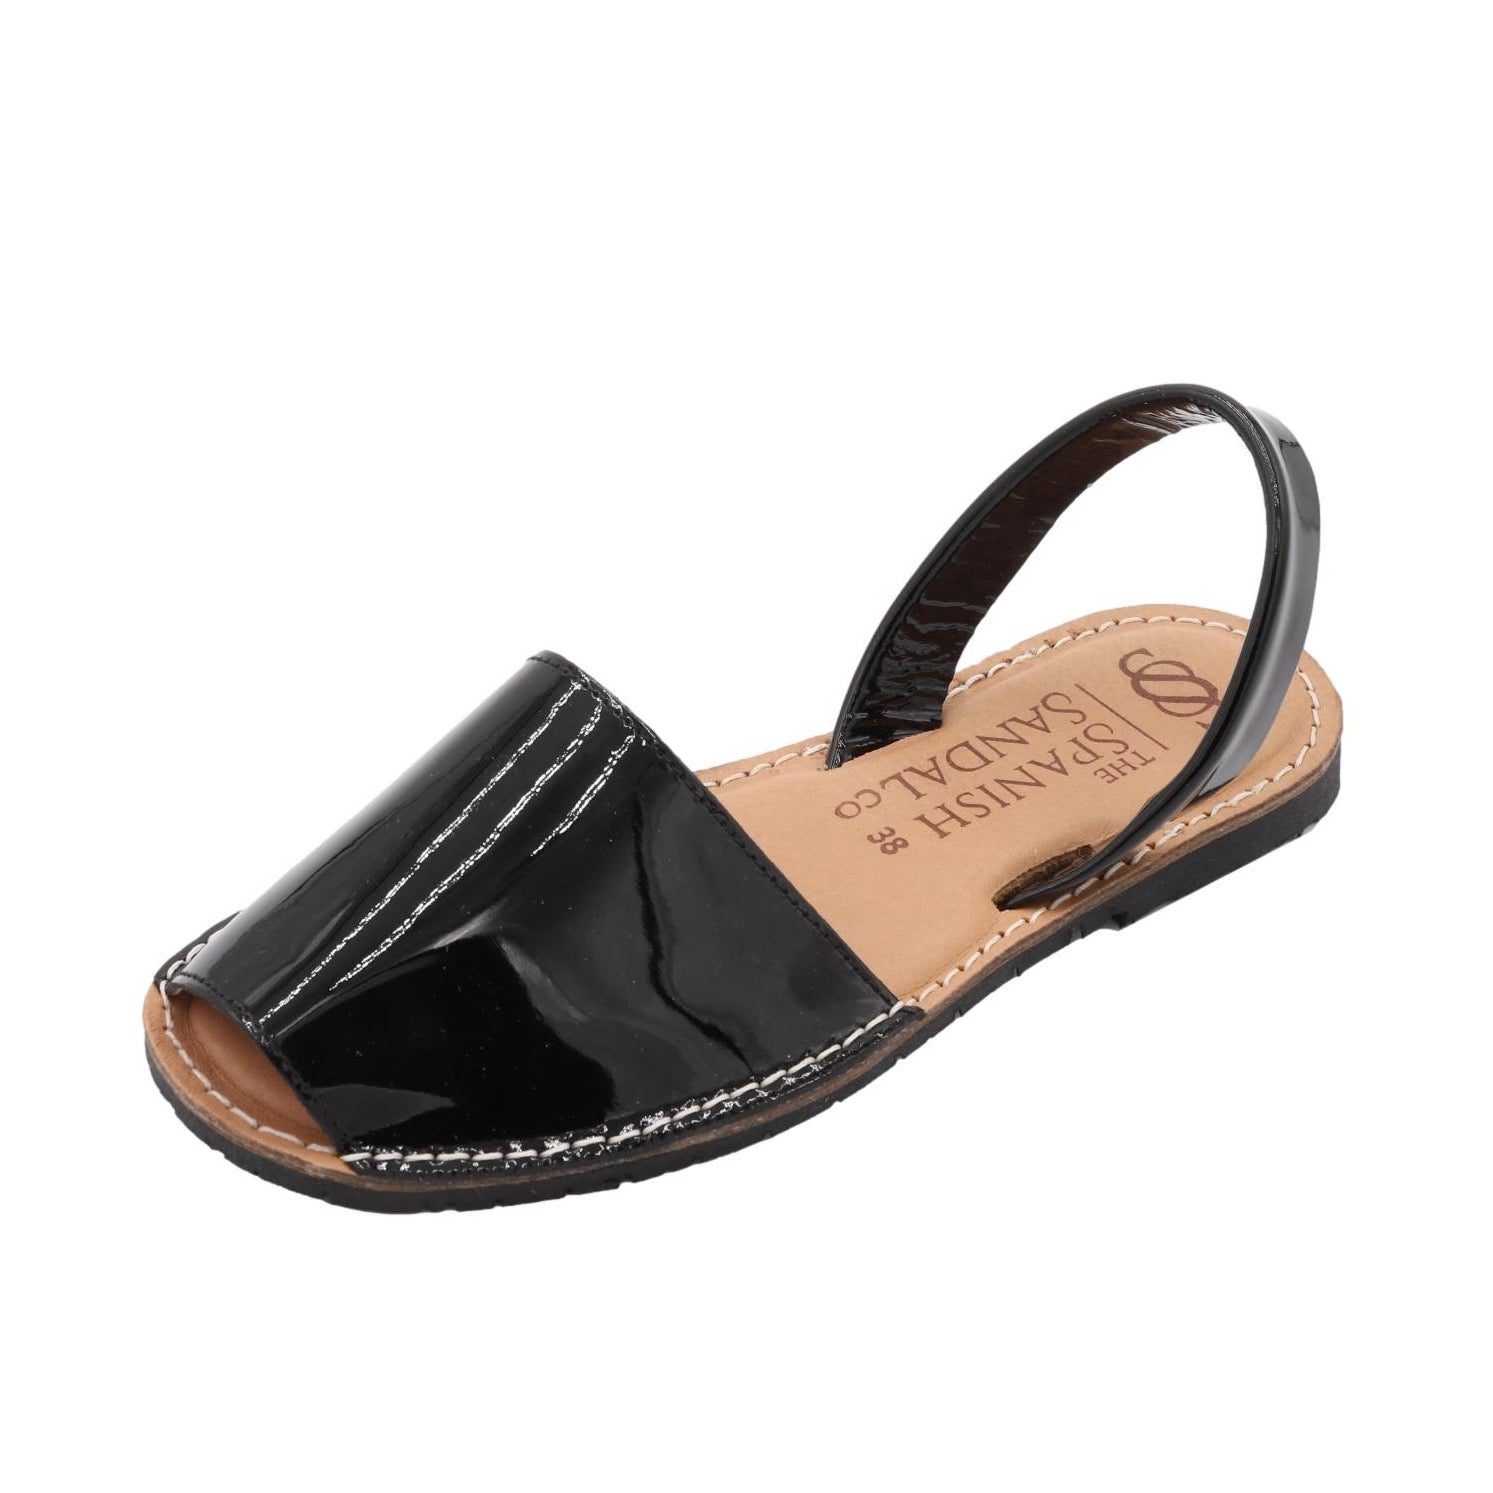 Black patent sandals